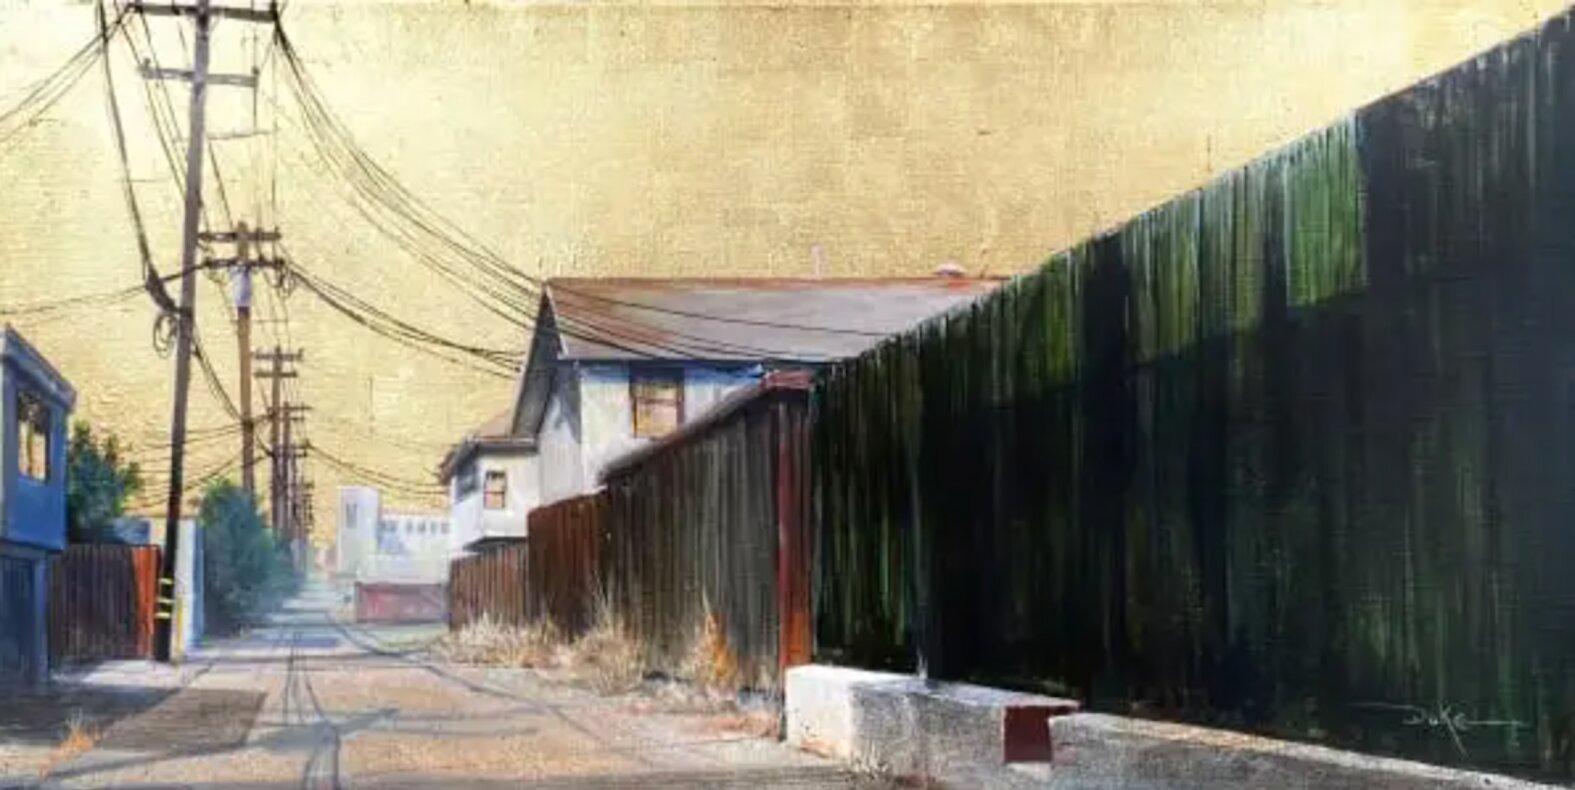 Duke Windsor Landscape Painting - Impressionistic Cityscape Acrylic Painting, "The Green Fence"